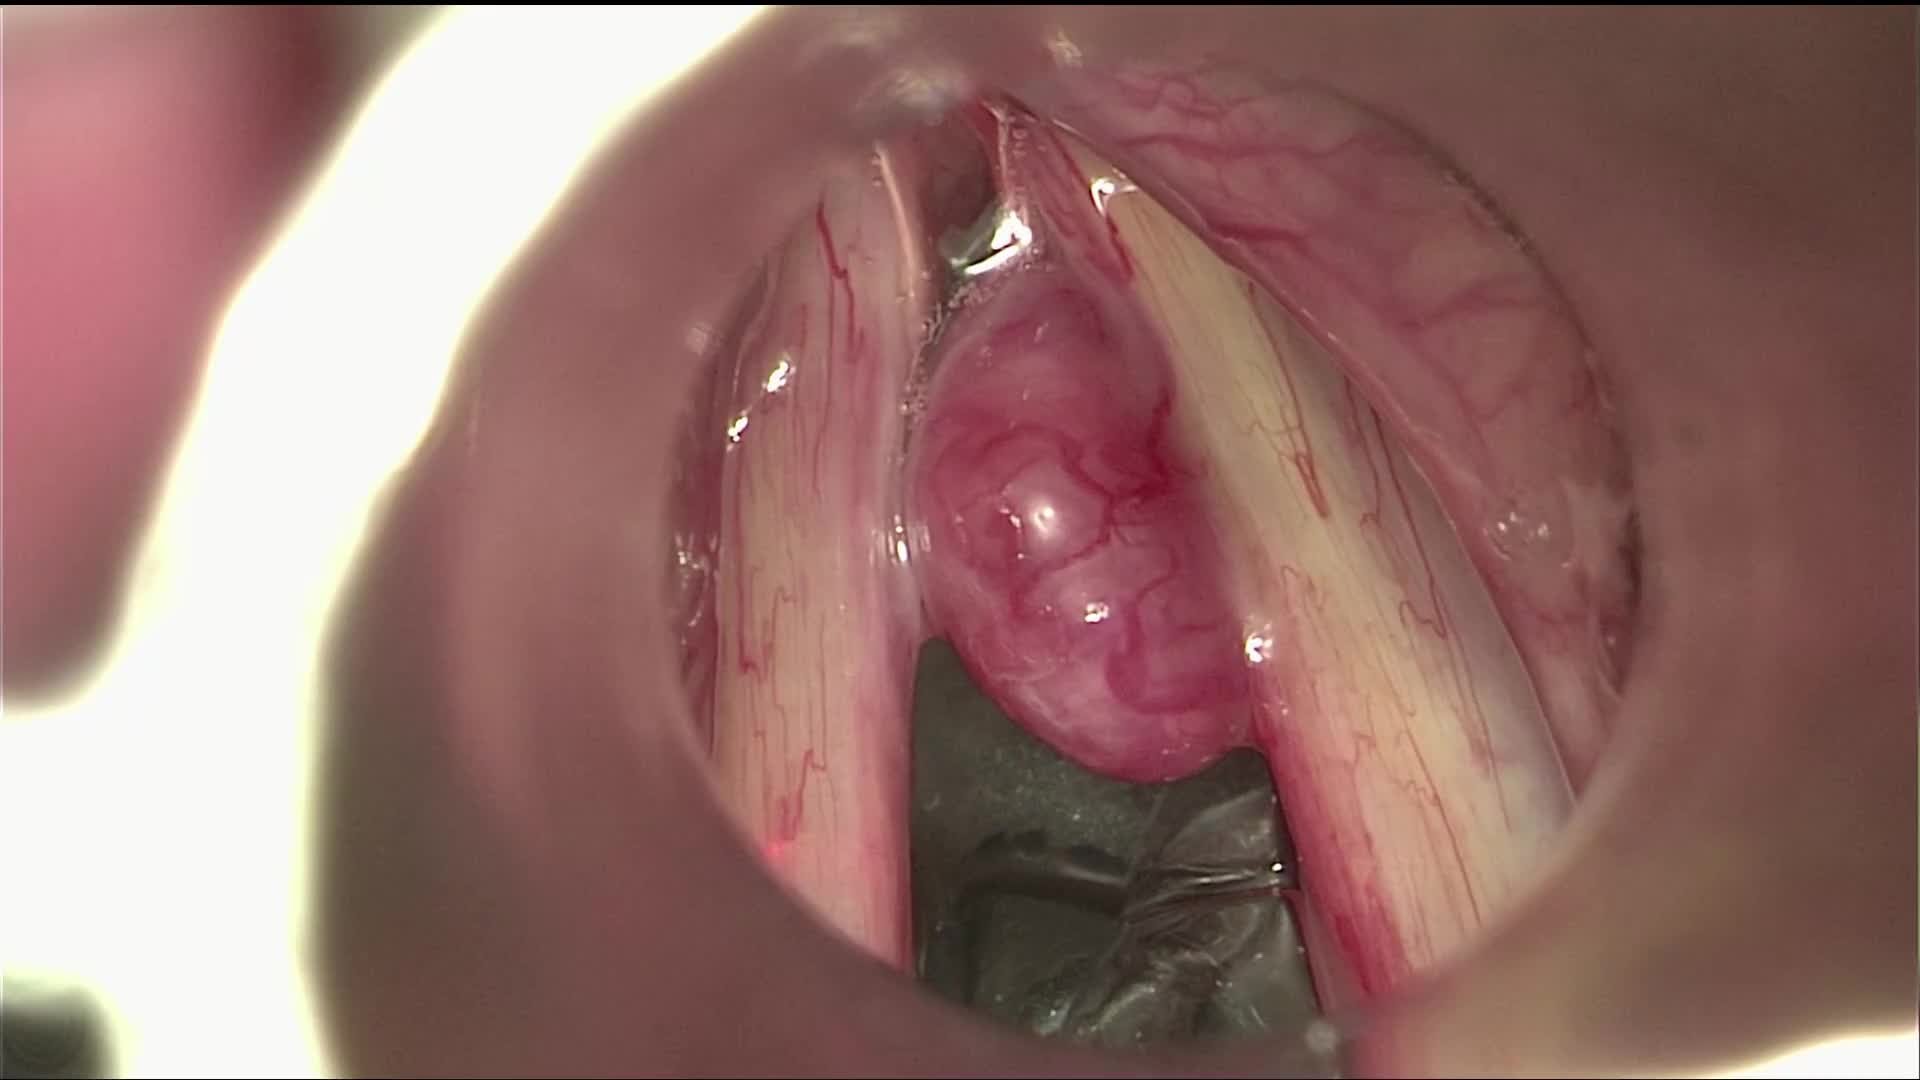 Hemorrhagic polyp of the right vocal fold